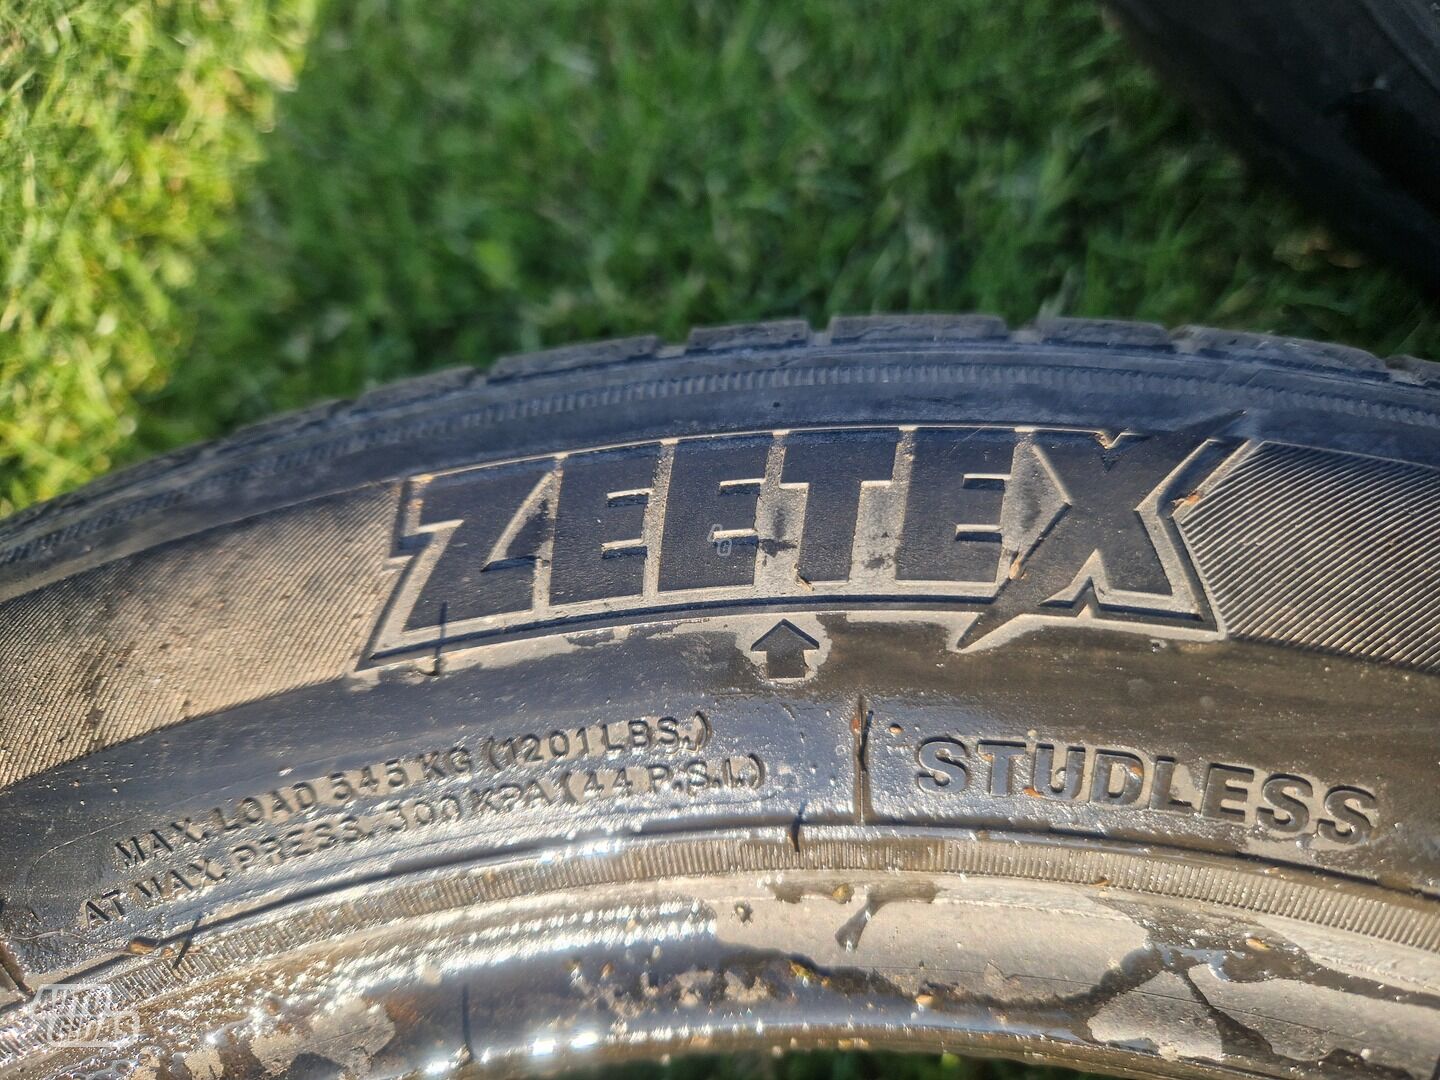 Zeetex Wp1000 R16 winter tyres passanger car